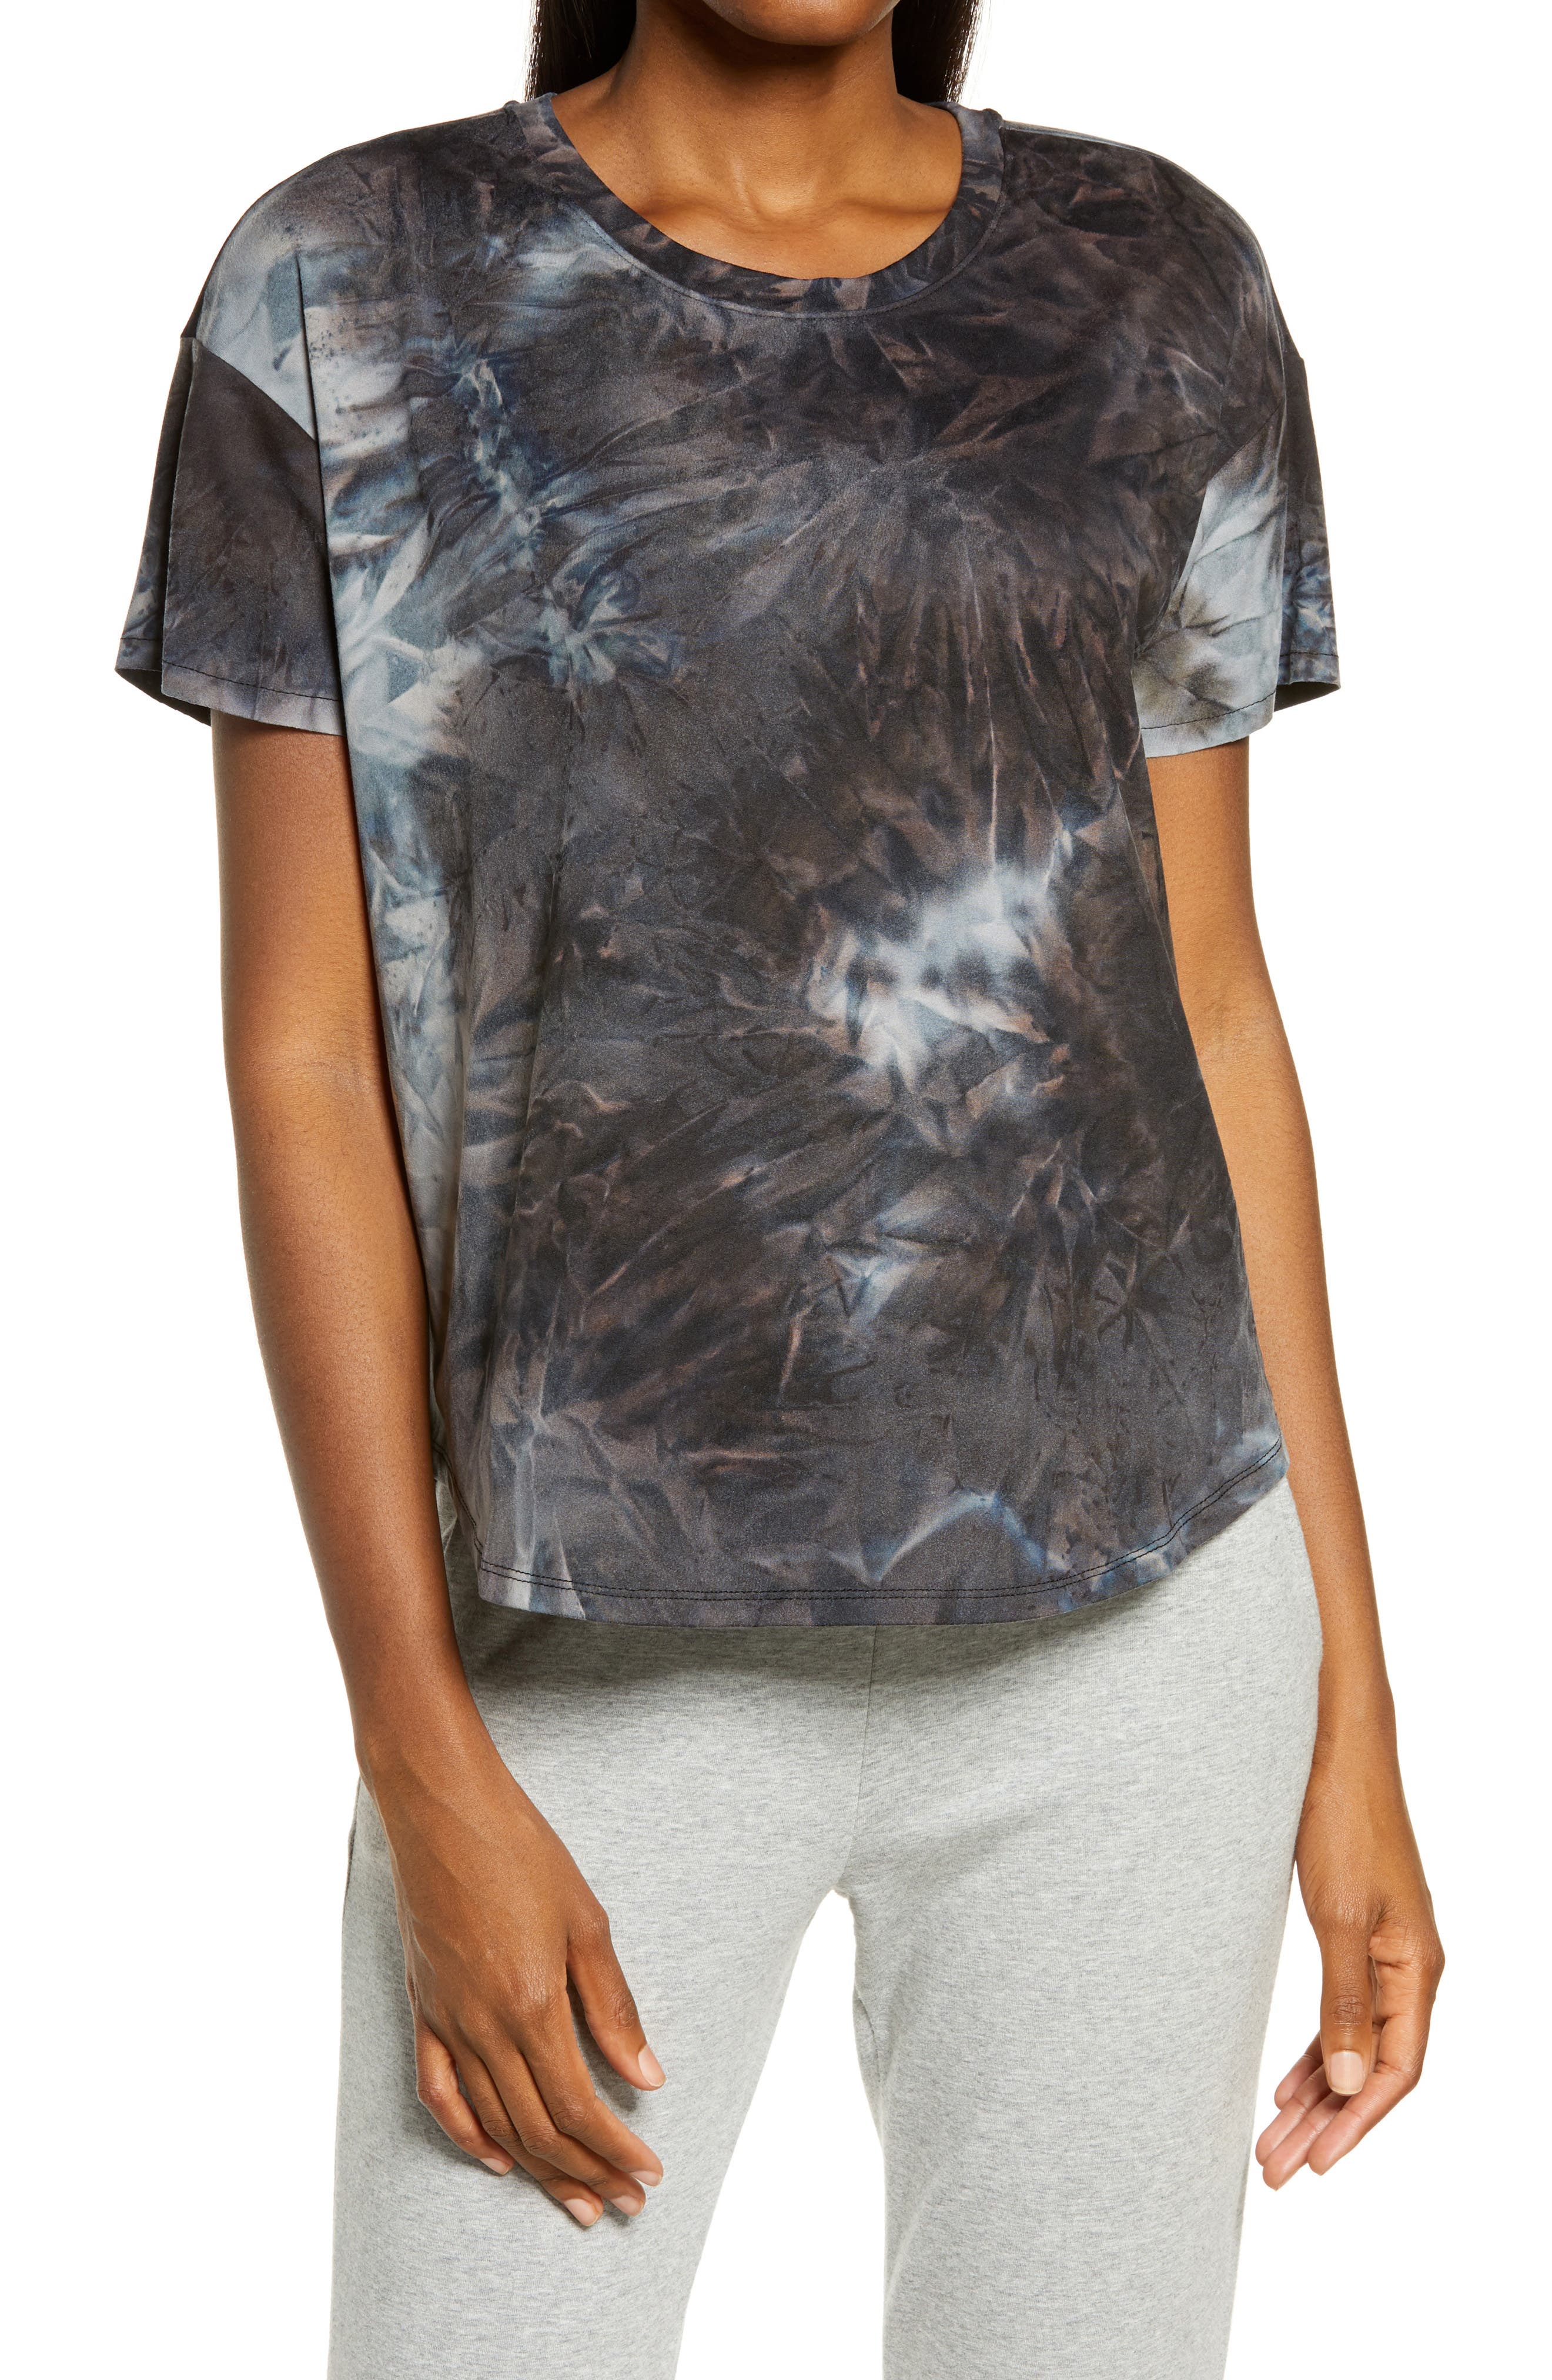 T Shirts for Women Graphic Cute Lightning Rabbit Print Short Sleeve Crewneck Shirts Tops Blouse Tee Plus Size